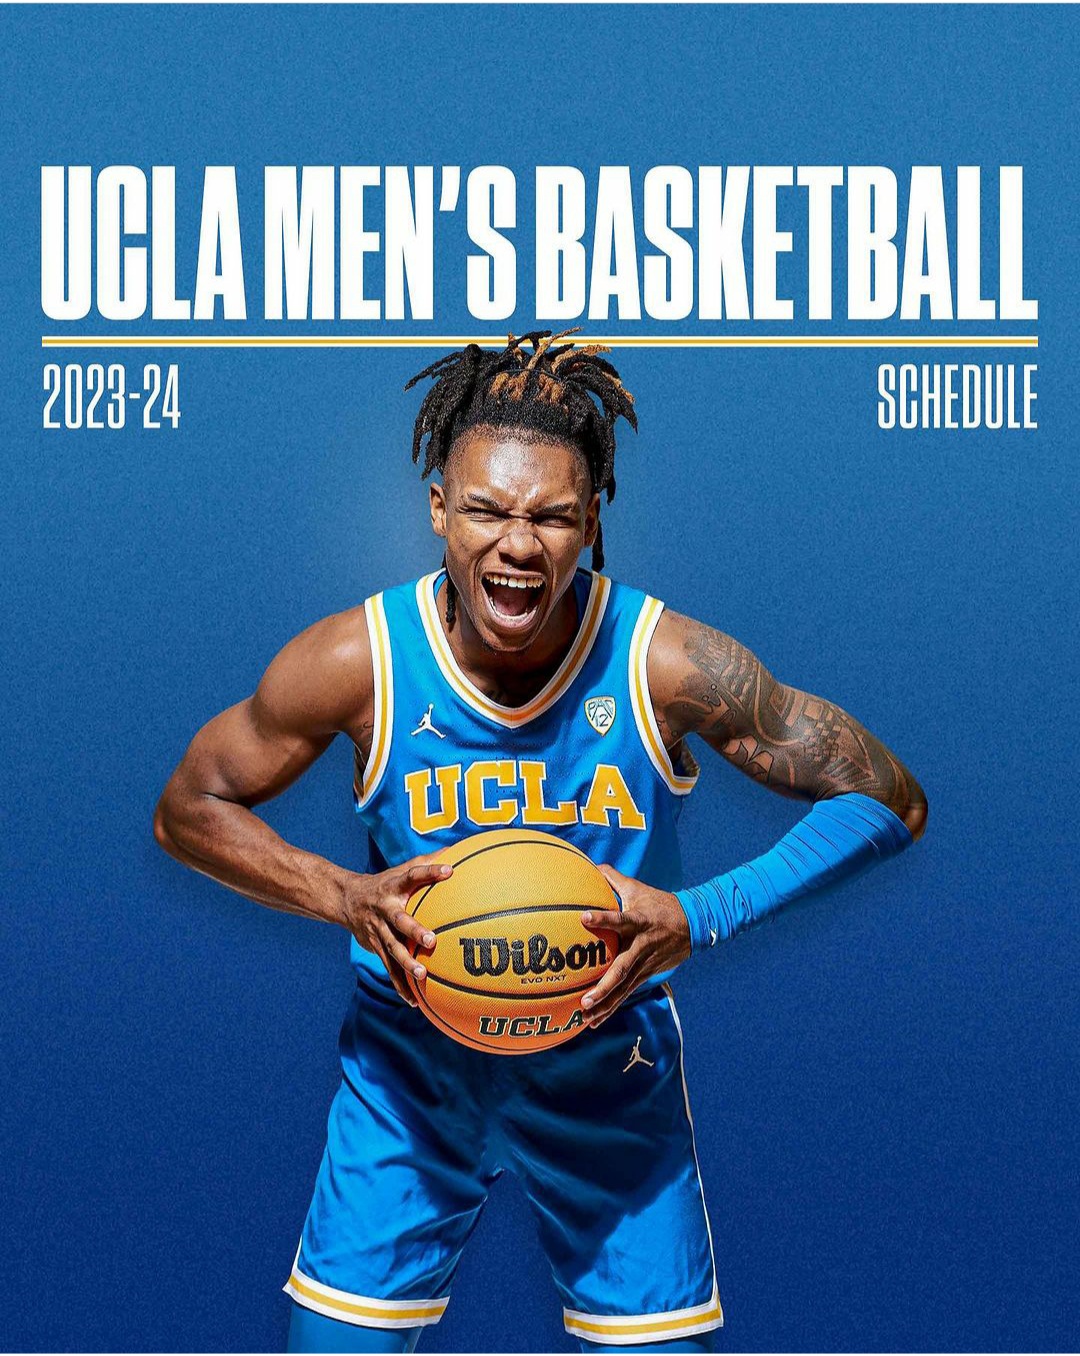 UCLA Men's Basketball Tickets - 2 tickets